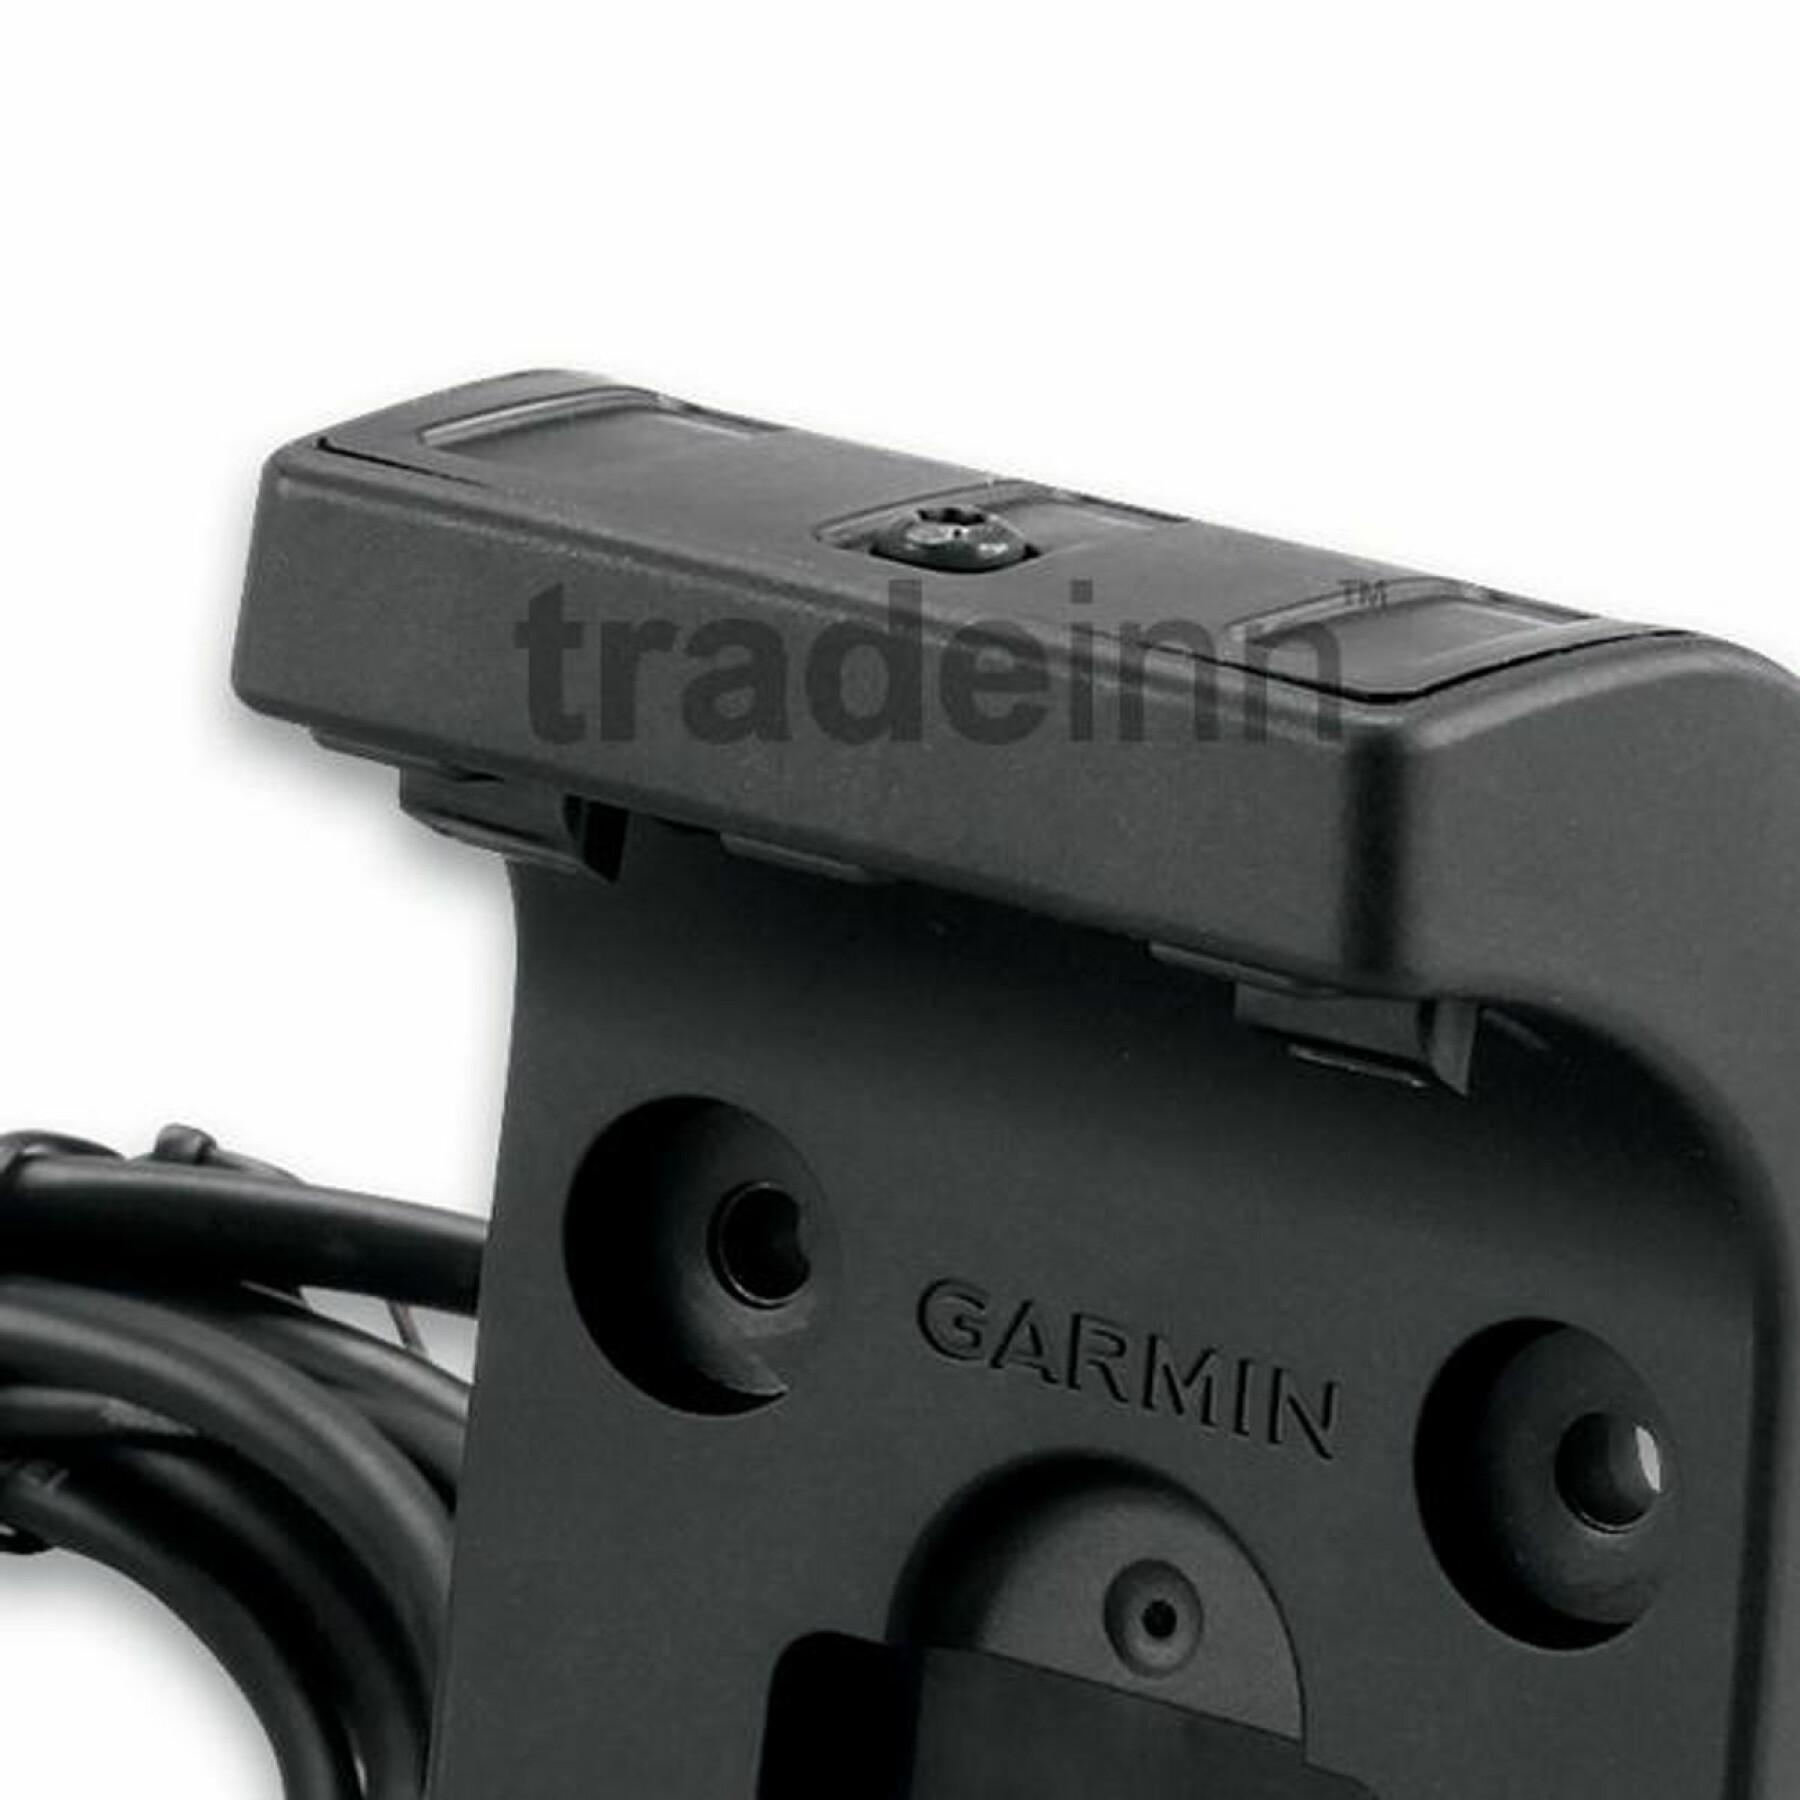 Support Garmin moto avec câble alimentation/audio